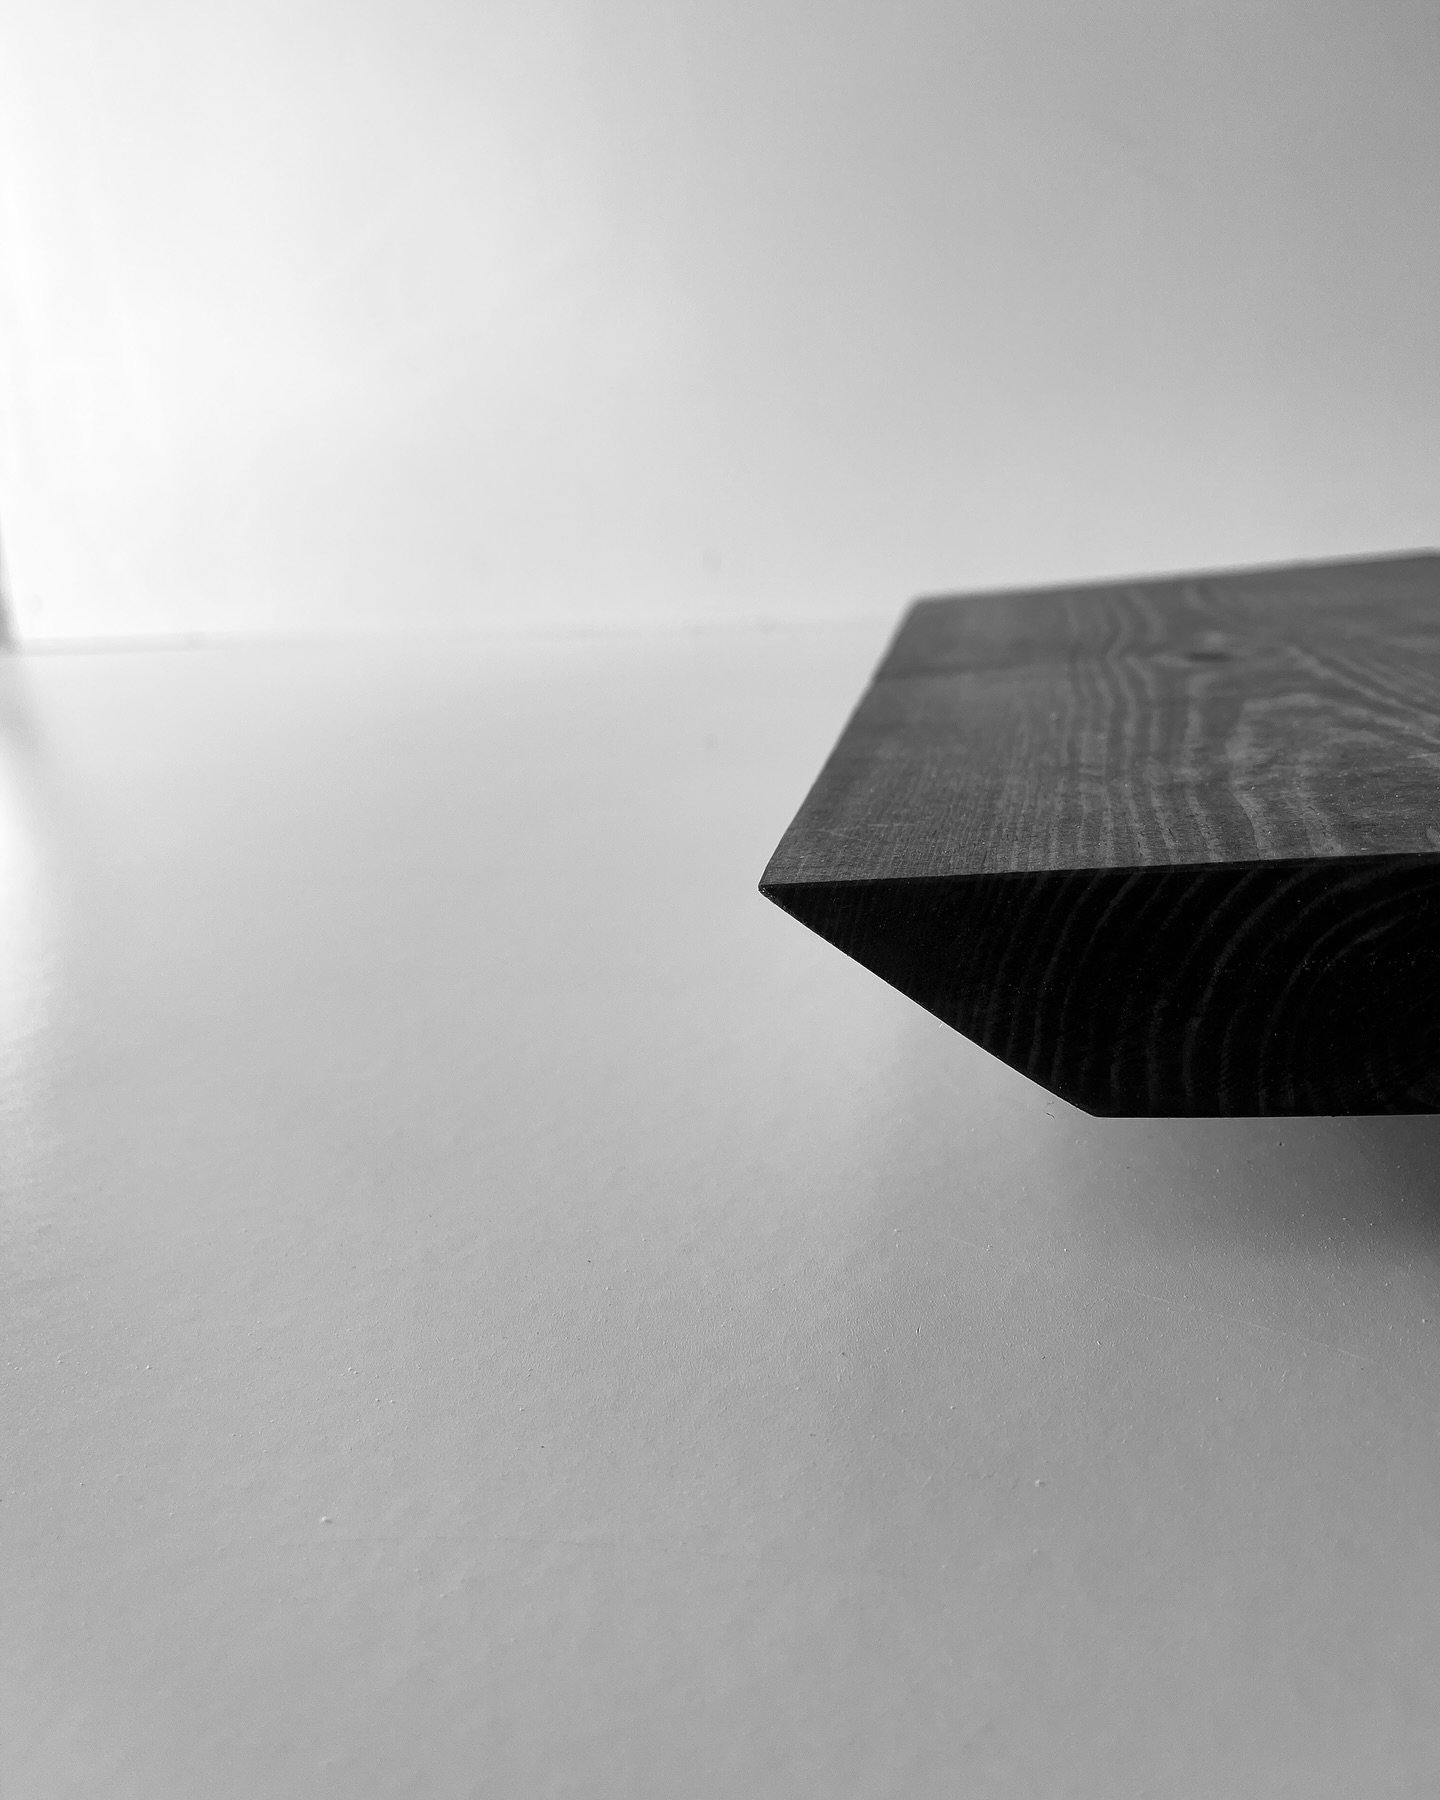 New table edge bespoke option - sliced #bespoke #customfurniture #design #interiordesign #woodenfurniture #handcrafted #handtools #customdesign #foryou #yourchoice #bespokeservice #oneofone